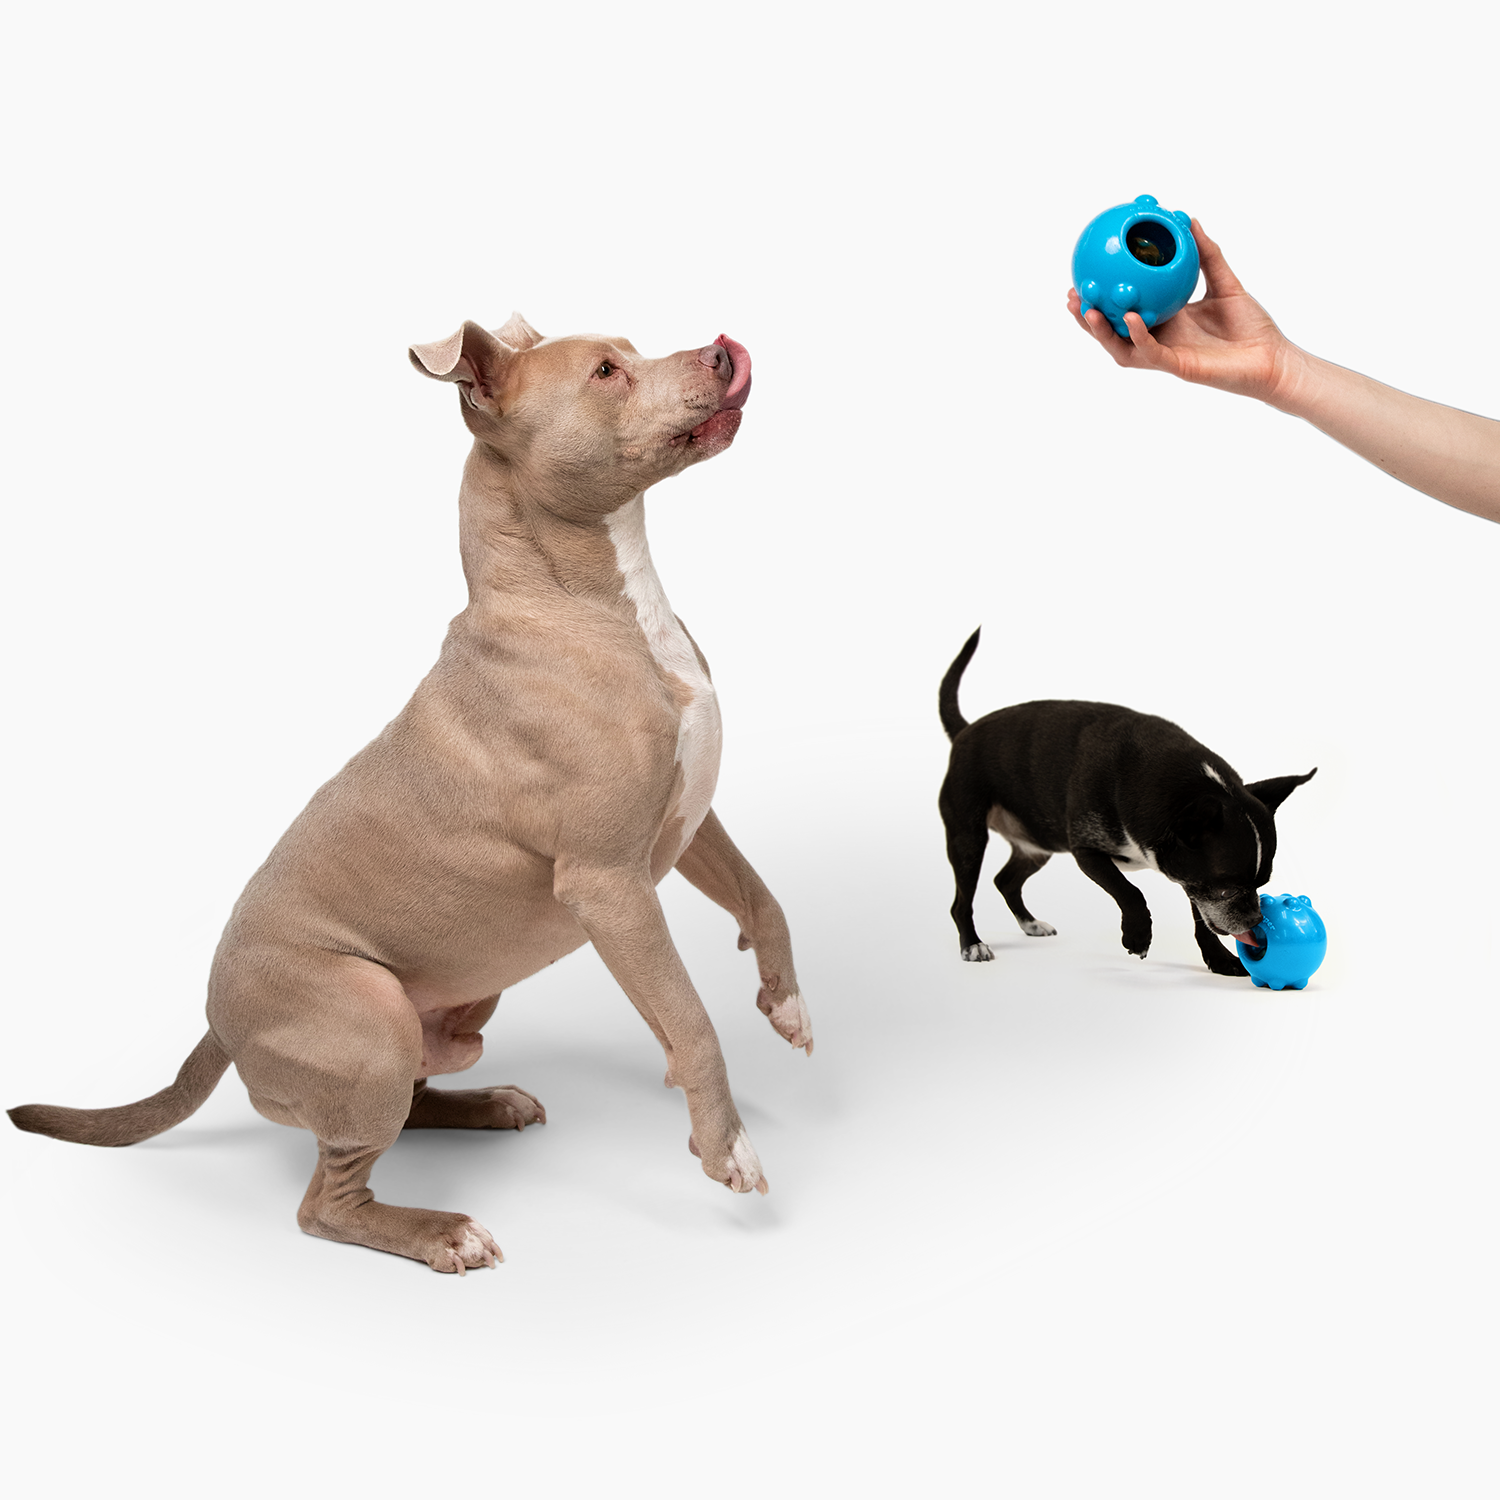  Dog Toy Dispenser - Doggy Treat Dispensing Chase Toys